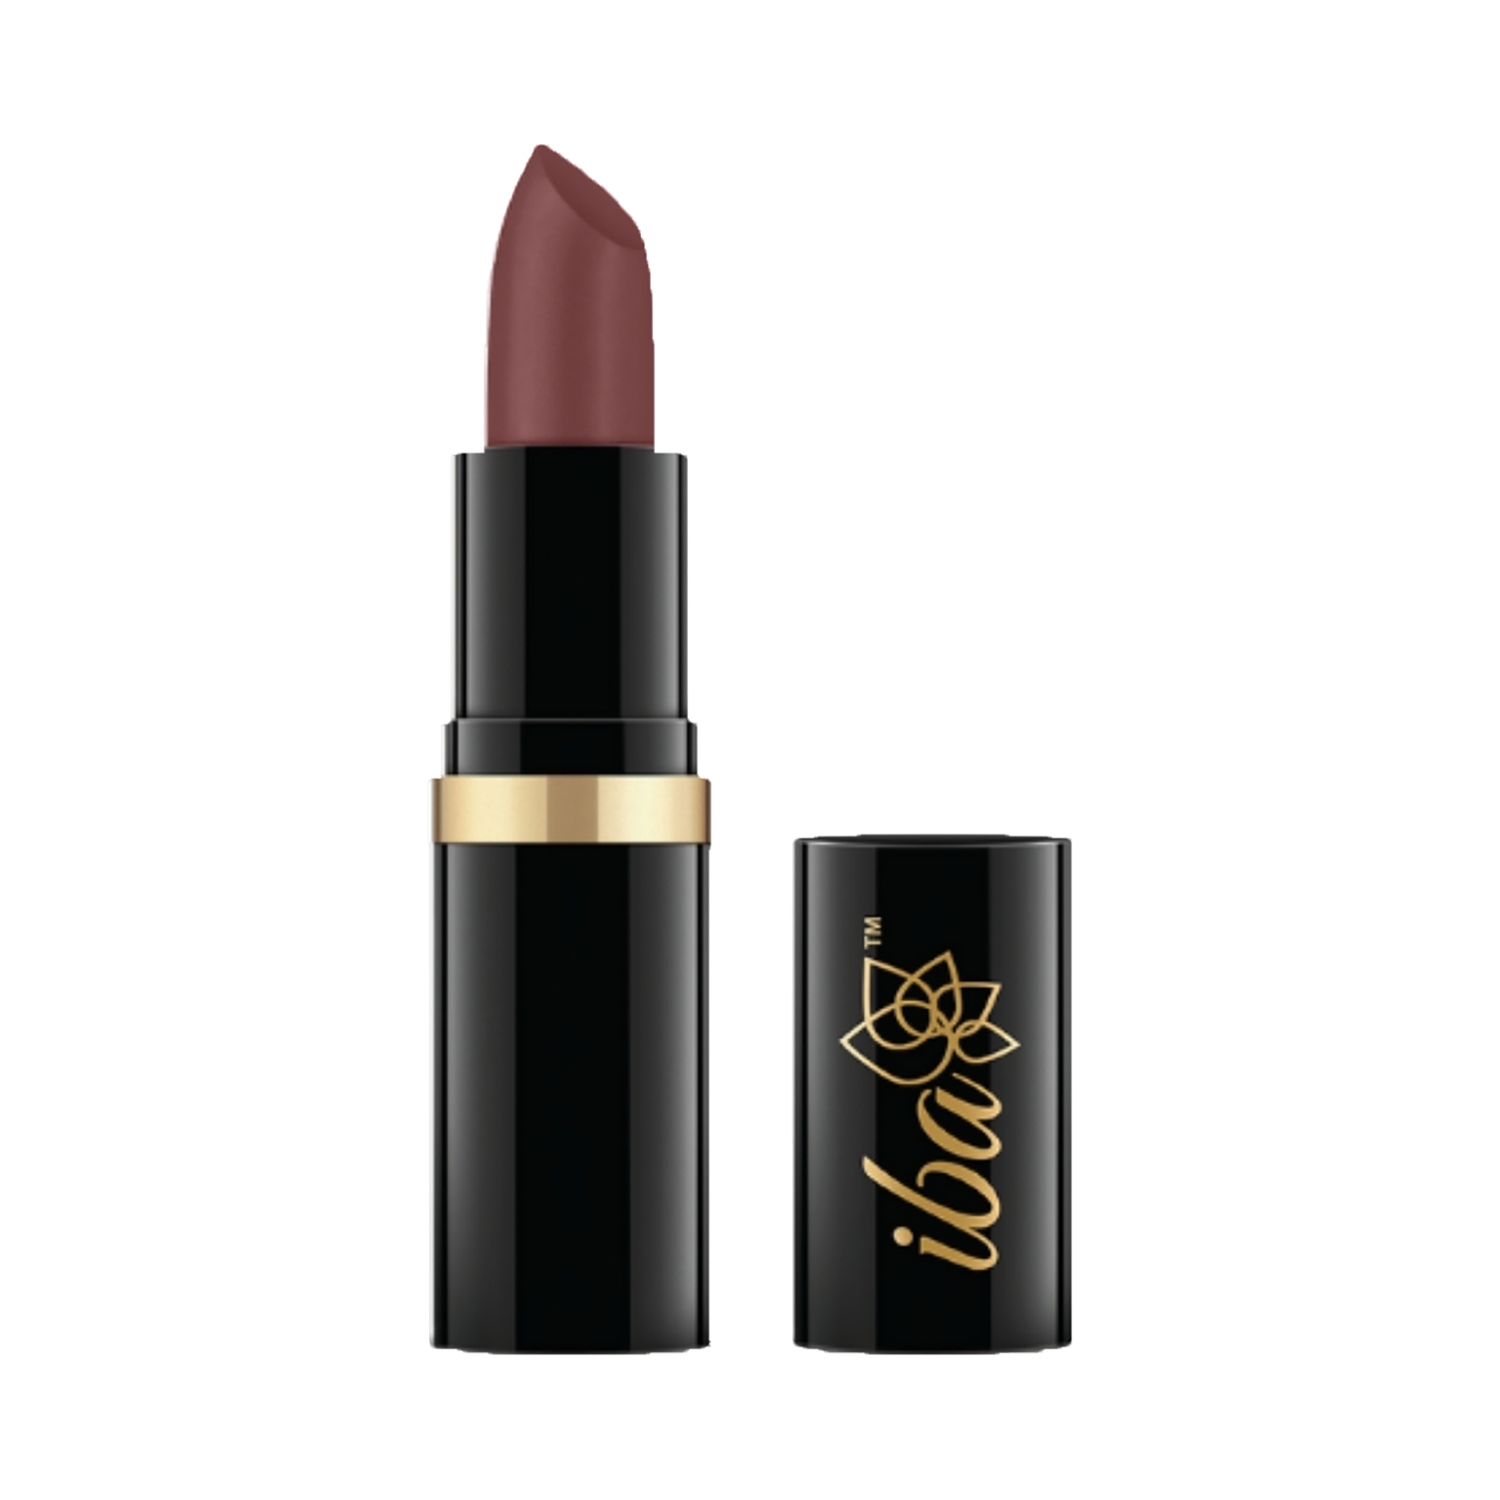 Iba | Iba Pure Lips Moisture Rich Lipstick - A46 Spicy Nude (4g)